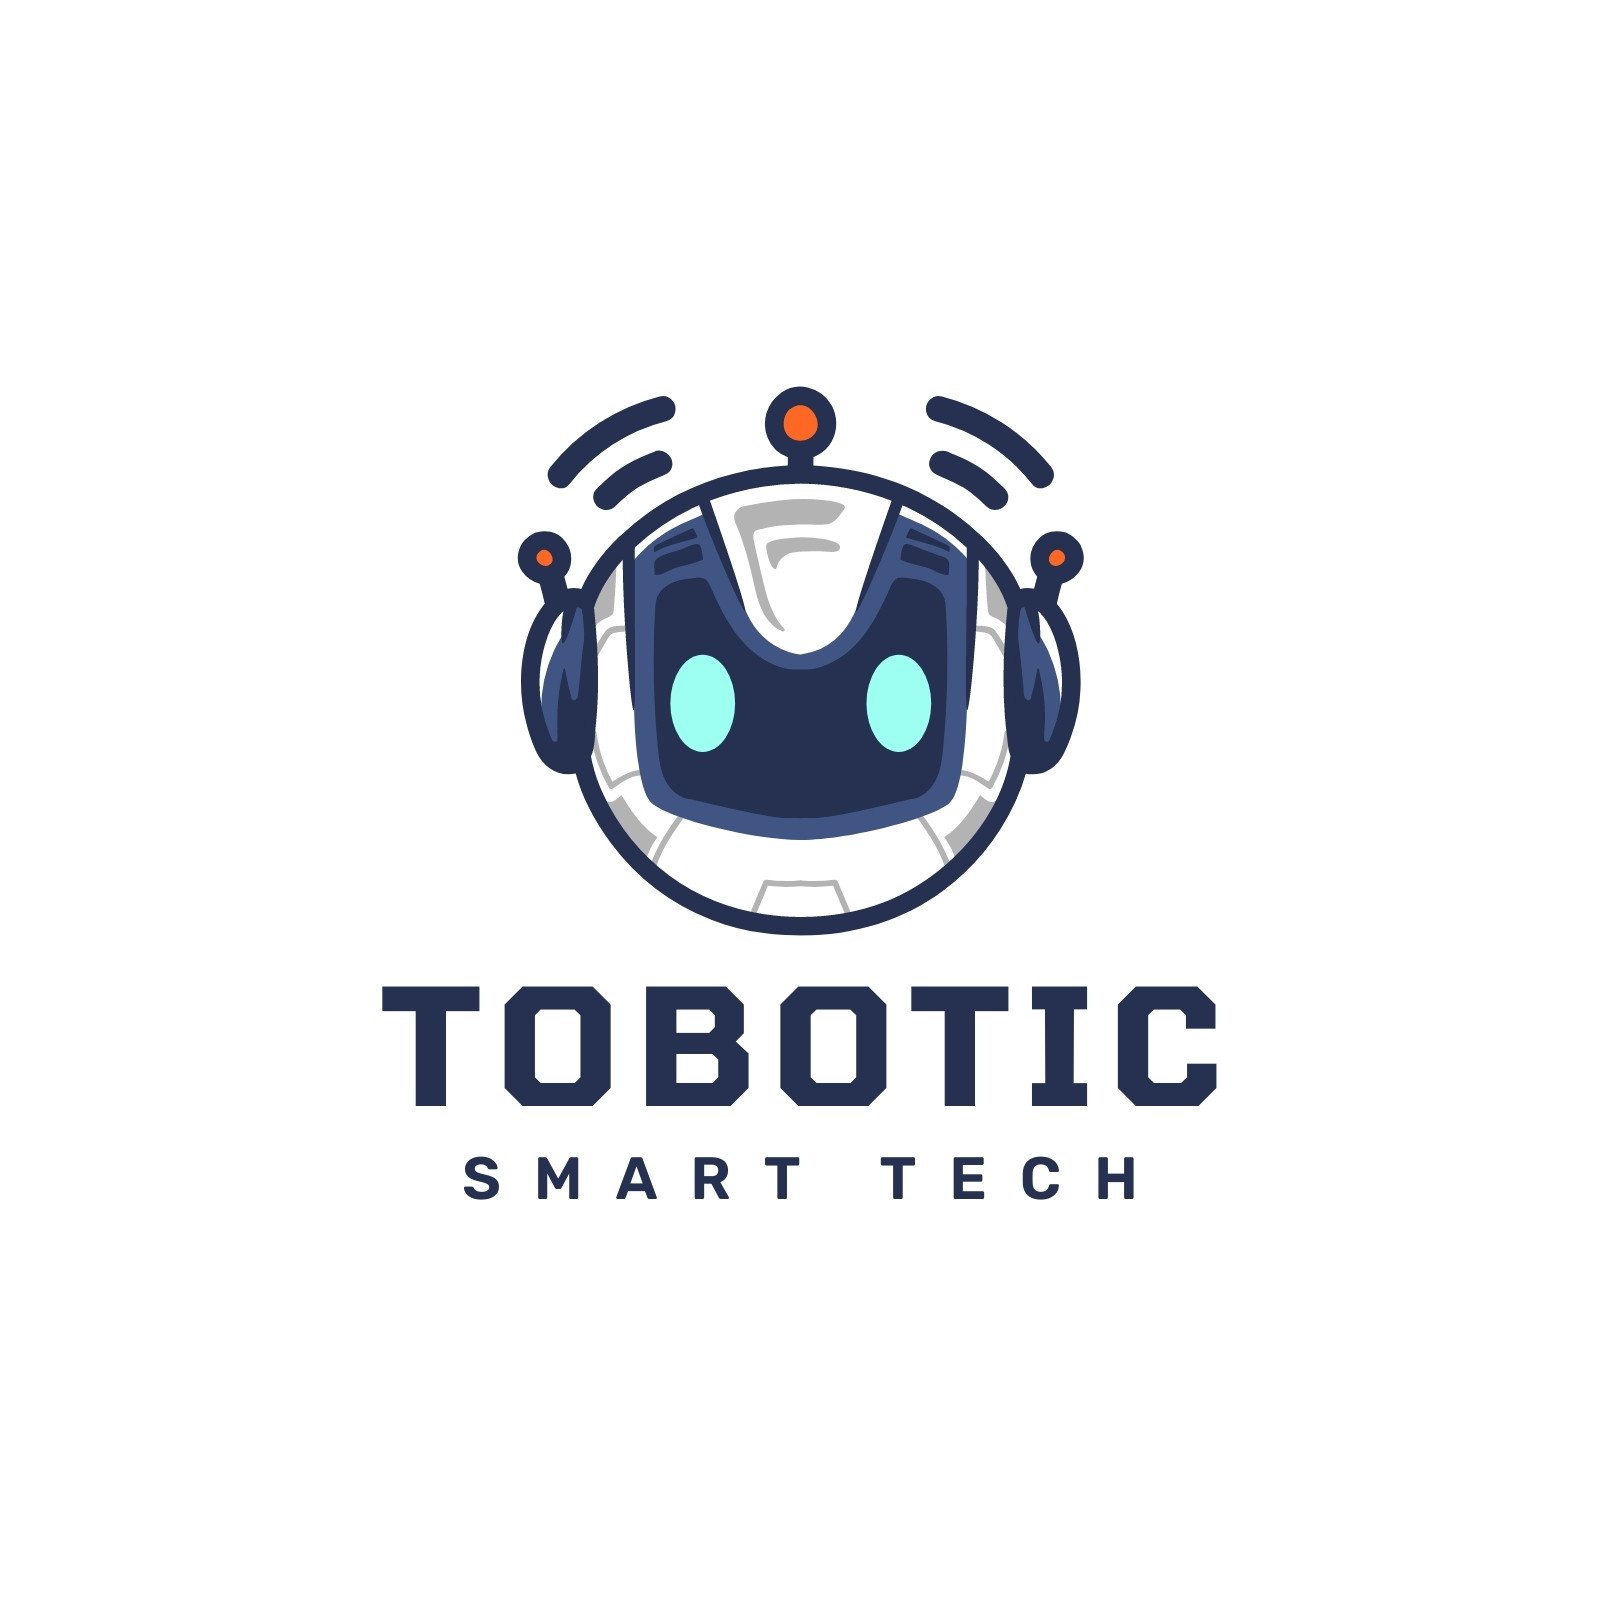 robot logo